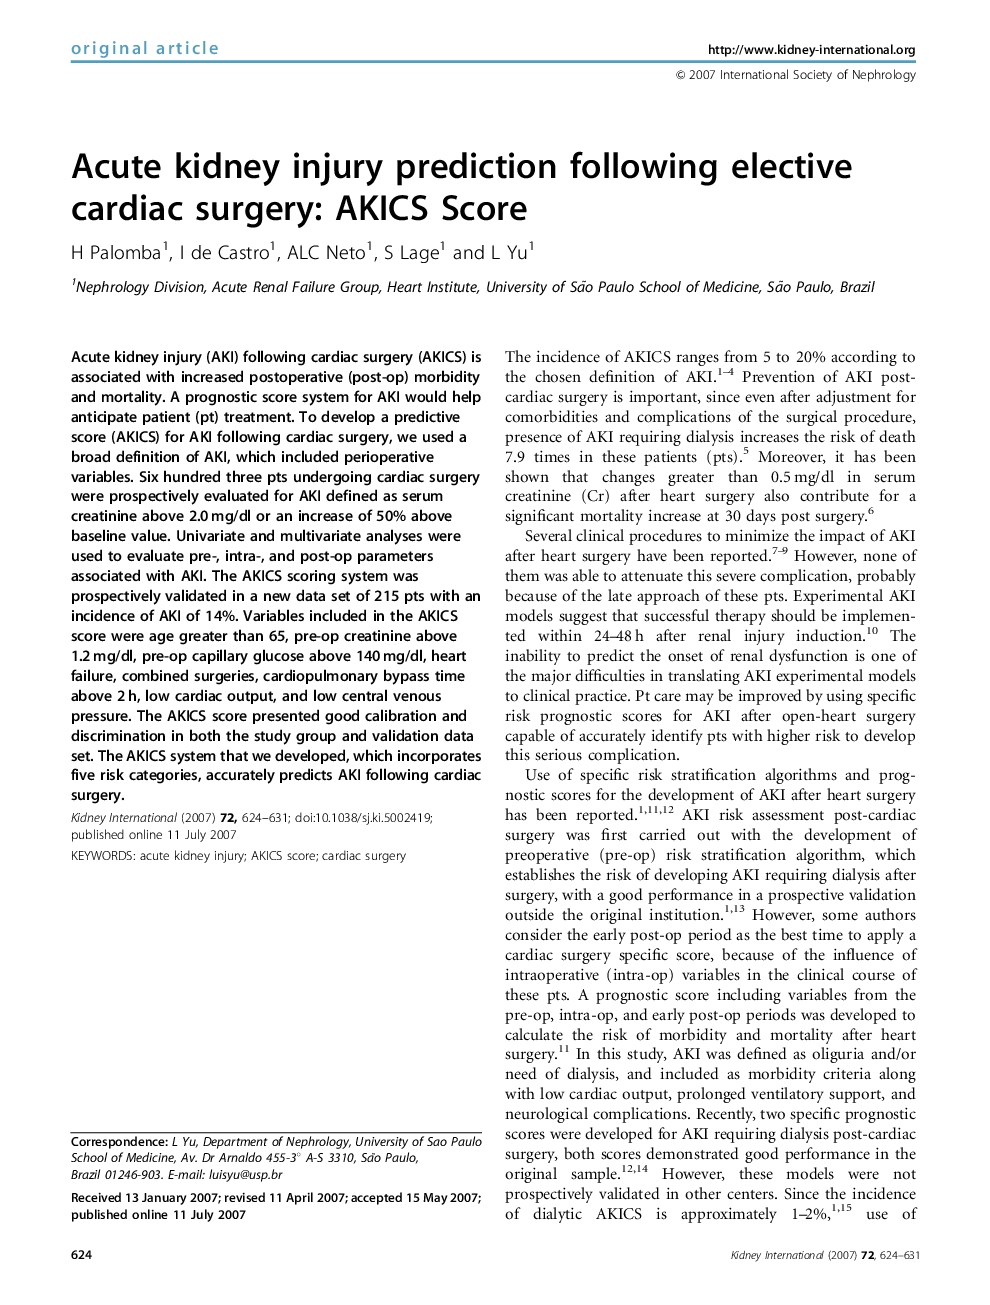 Acute kidney injury prediction following elective cardiac surgery: AKICS Score